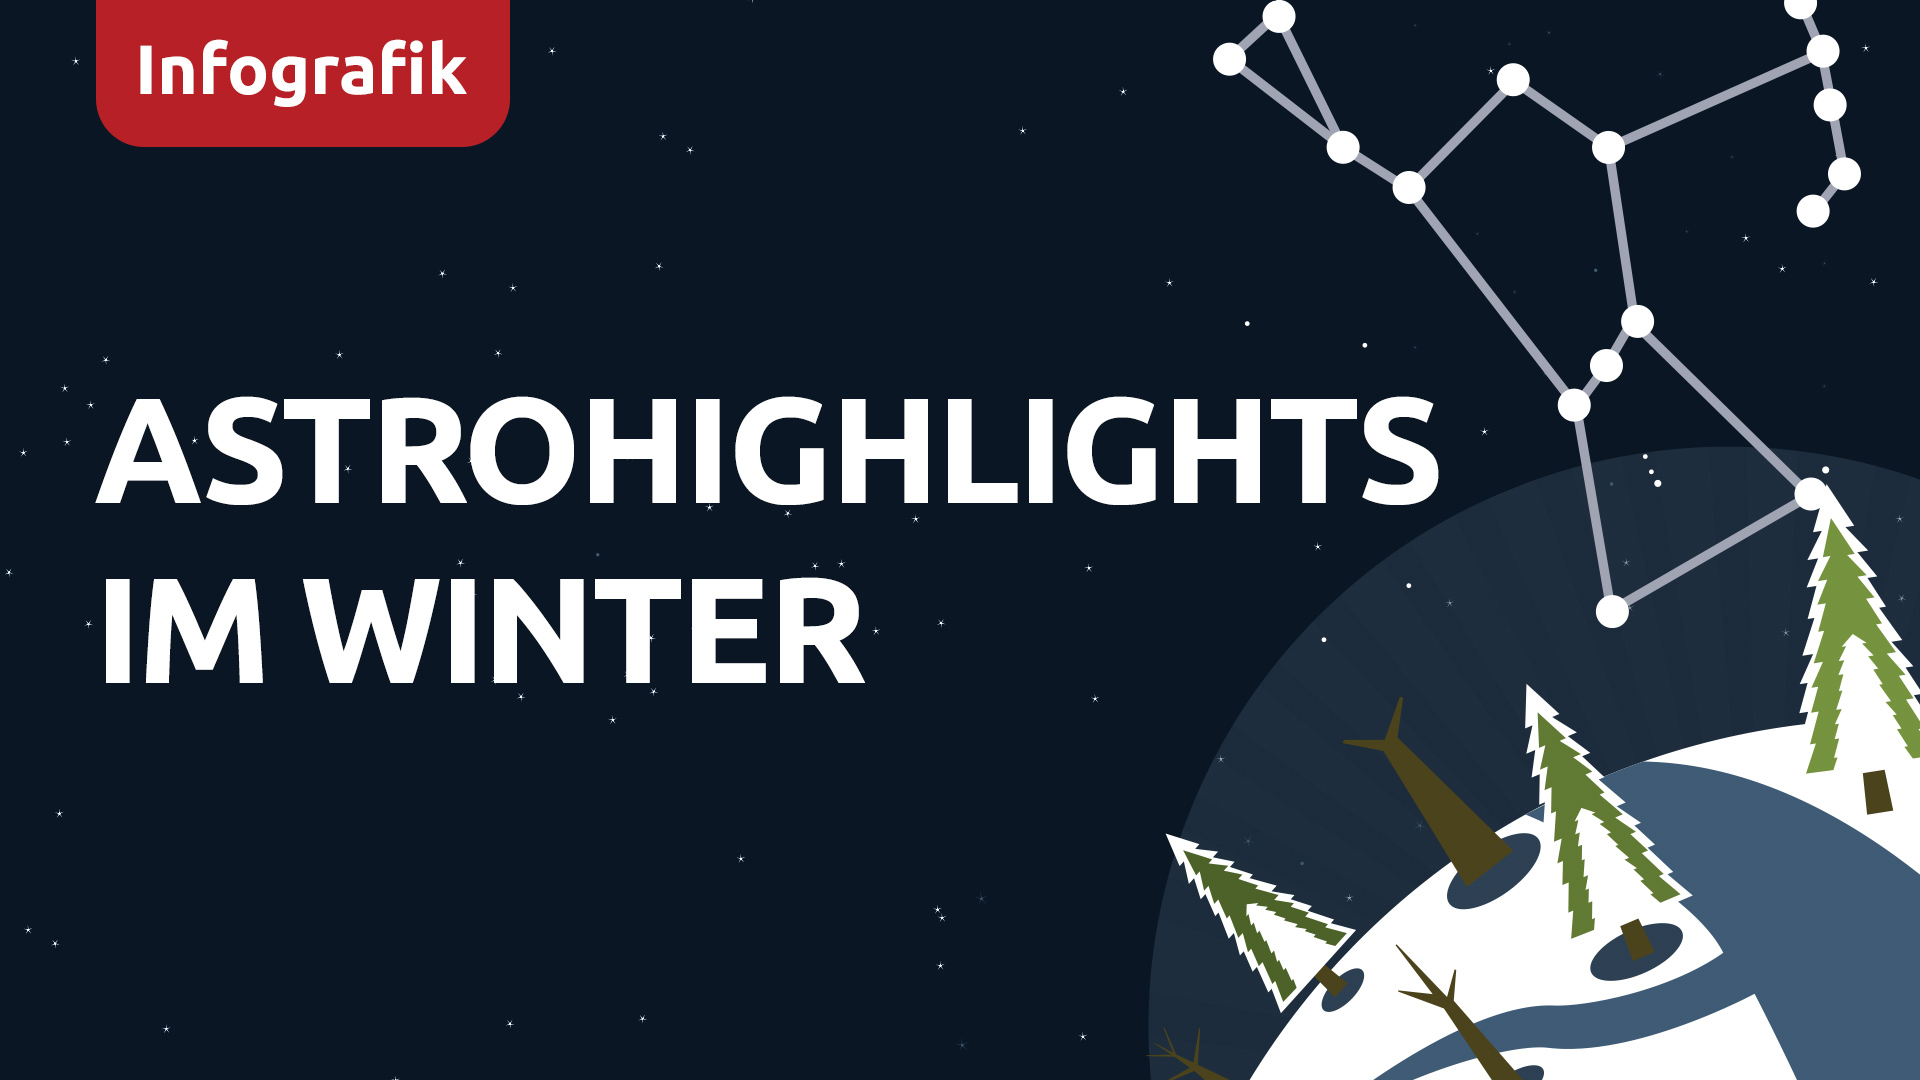 Infografik: Astrohighlights im Winter 2022/23